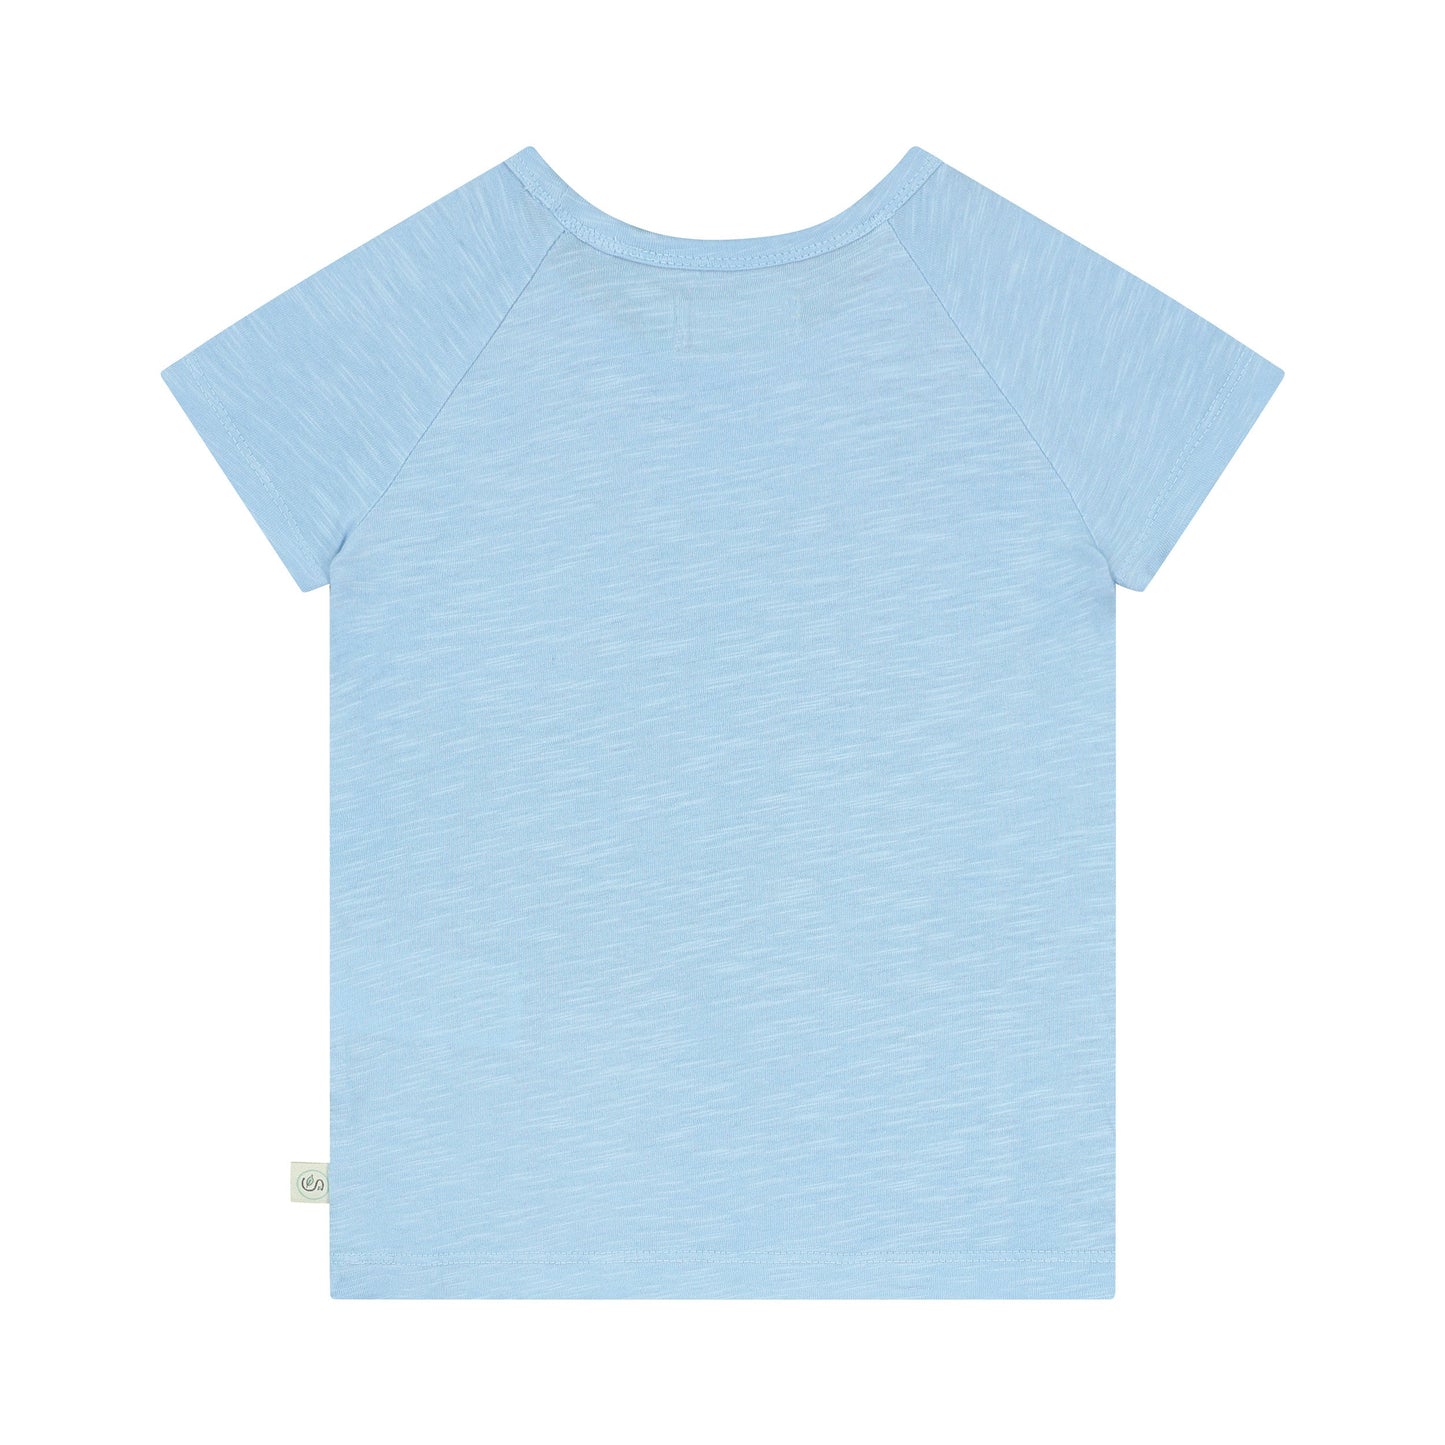 Hippo cracking skateboard short sleeve blue T-shirt